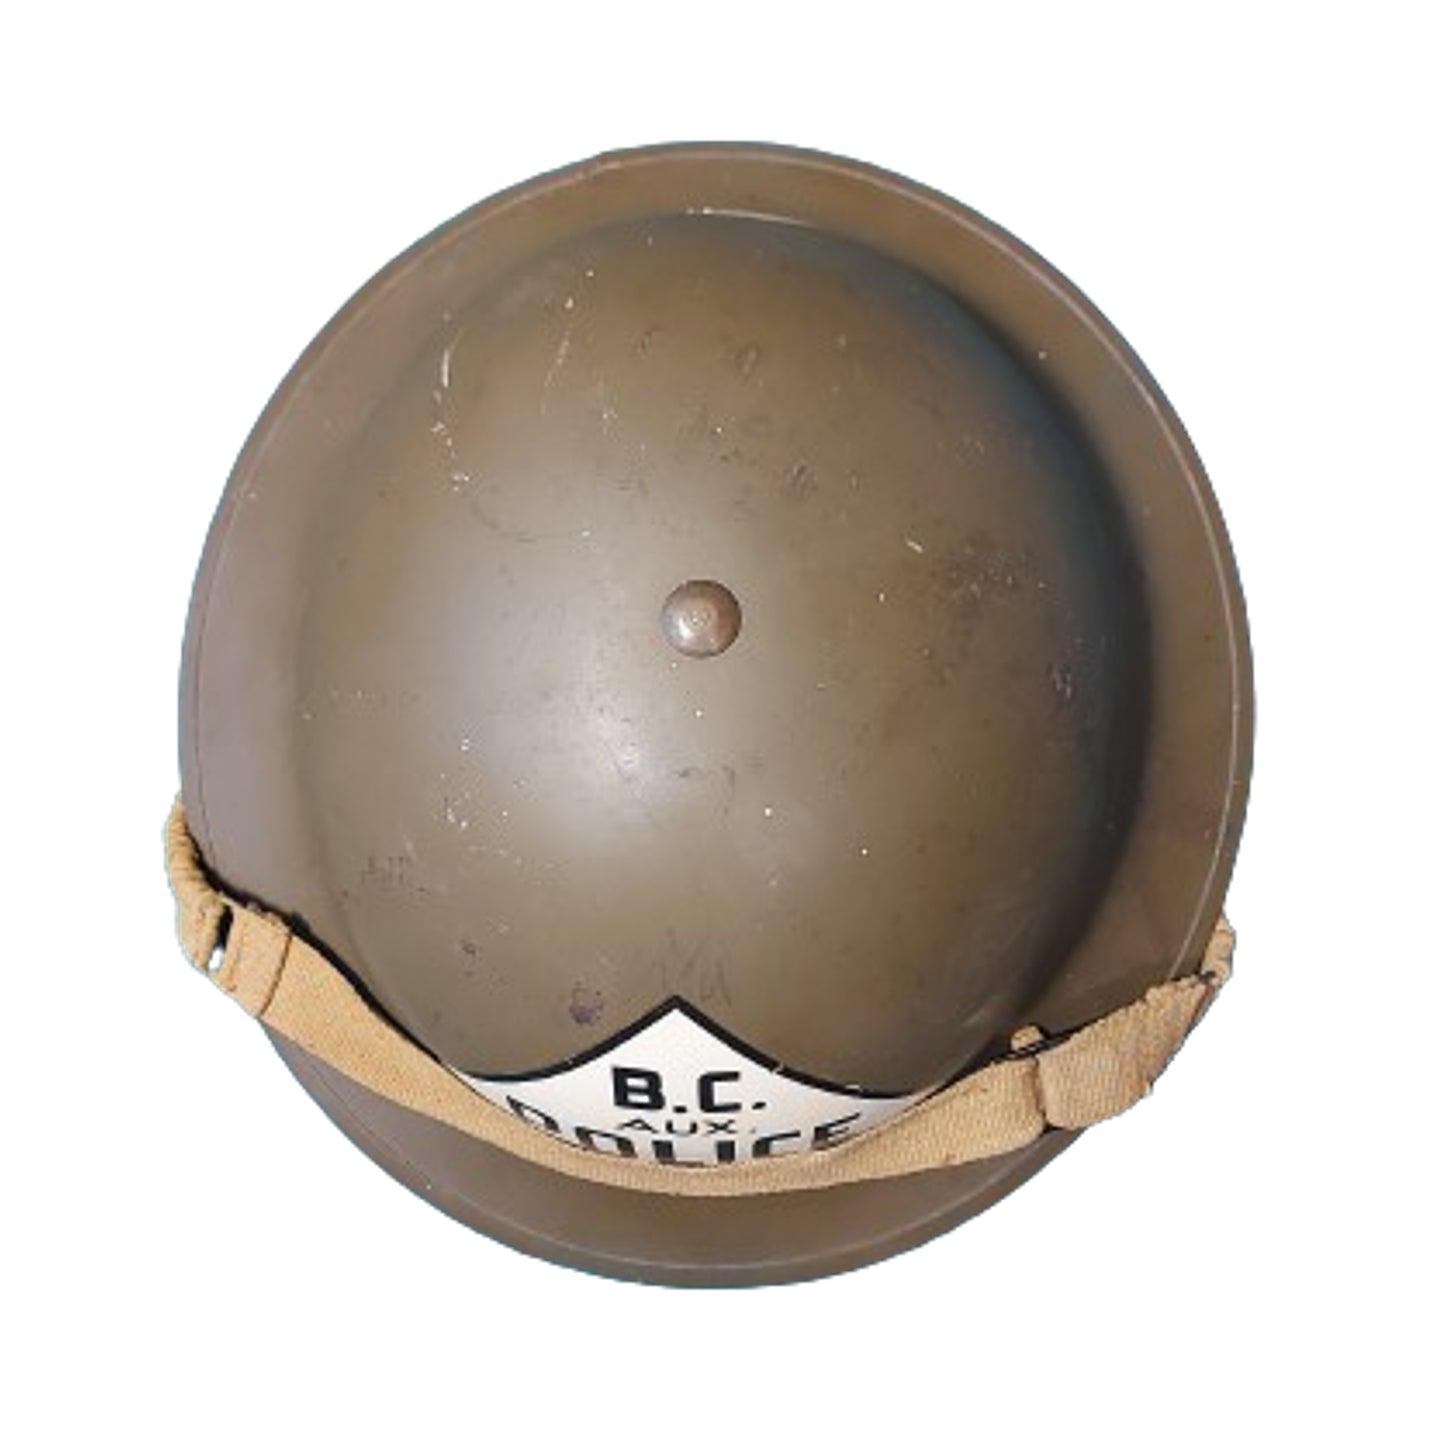 Named British Columbia B.C. Auxiliary Police Helmet